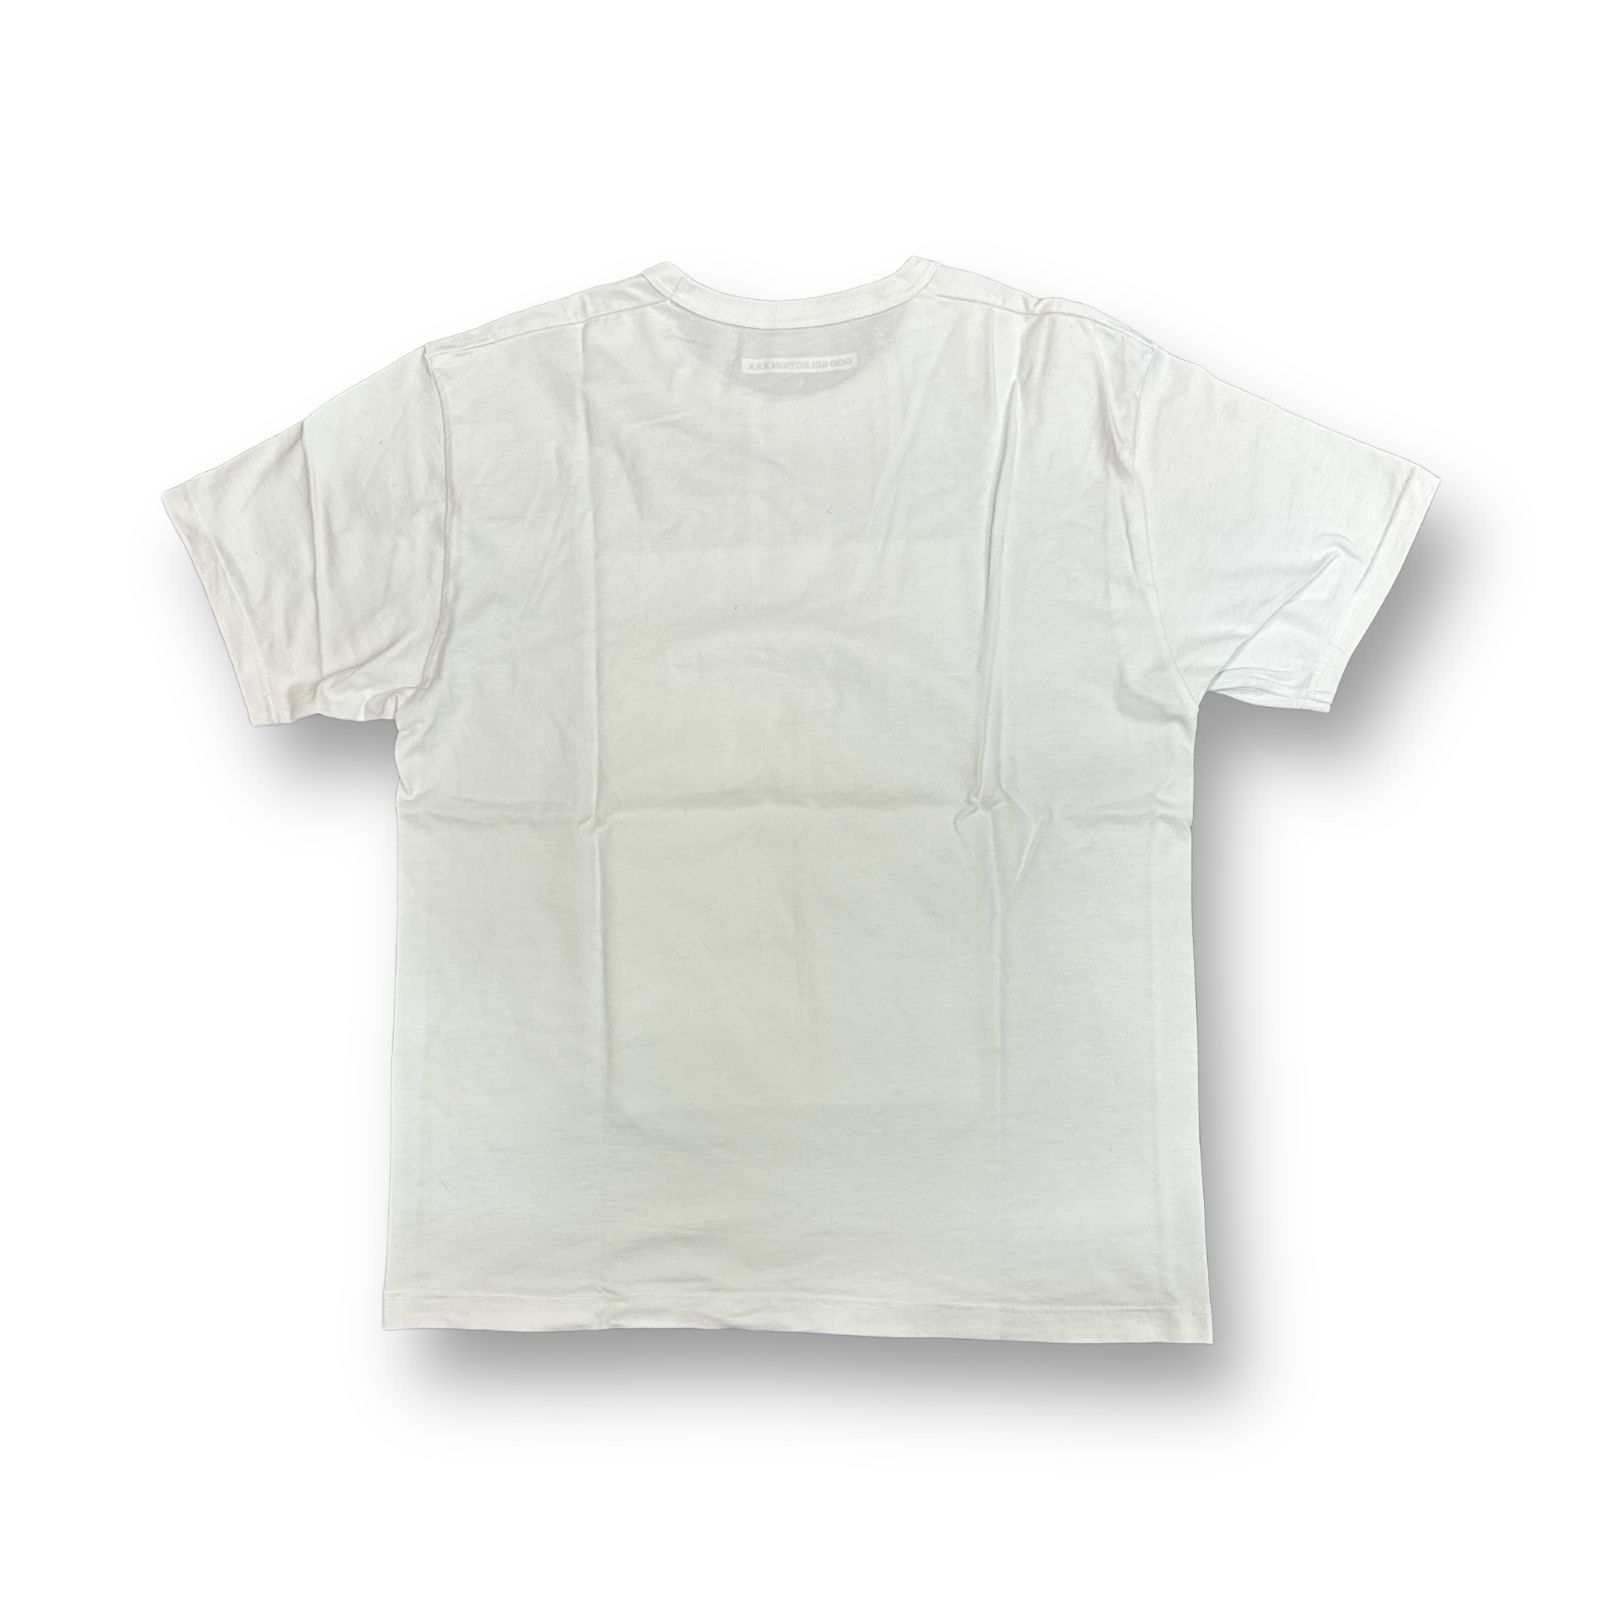 GOD SELECTION XXX Kate Moss Tee ケイトモス Tシャツ カットソー ゴッドセレクション ホワイト L 69796A6 -  メルカリ